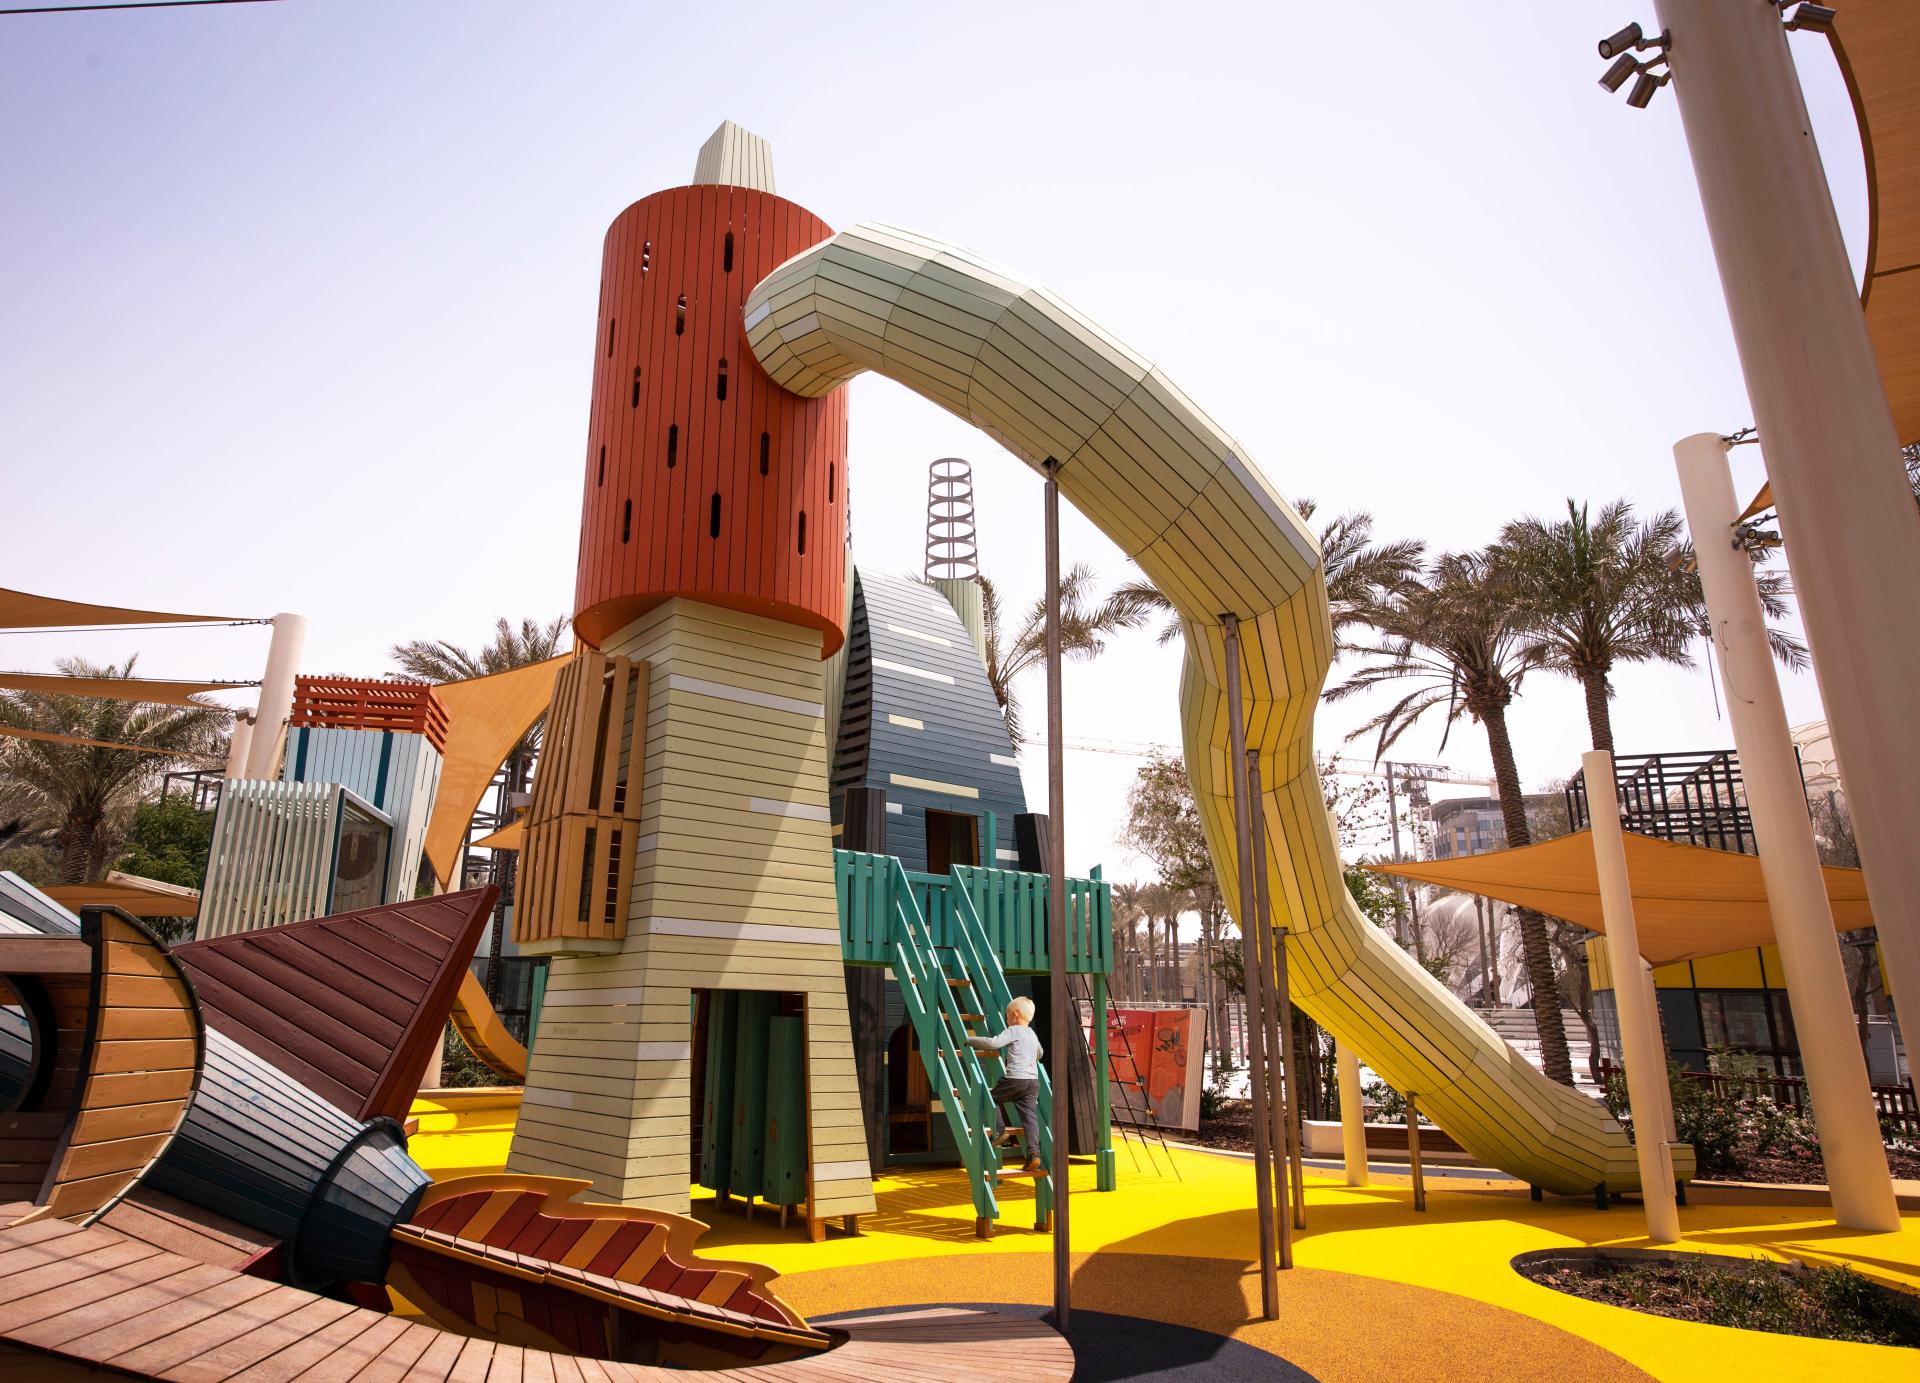 Future city playground at EXPO 2020 - MONSTRUM playgrounds